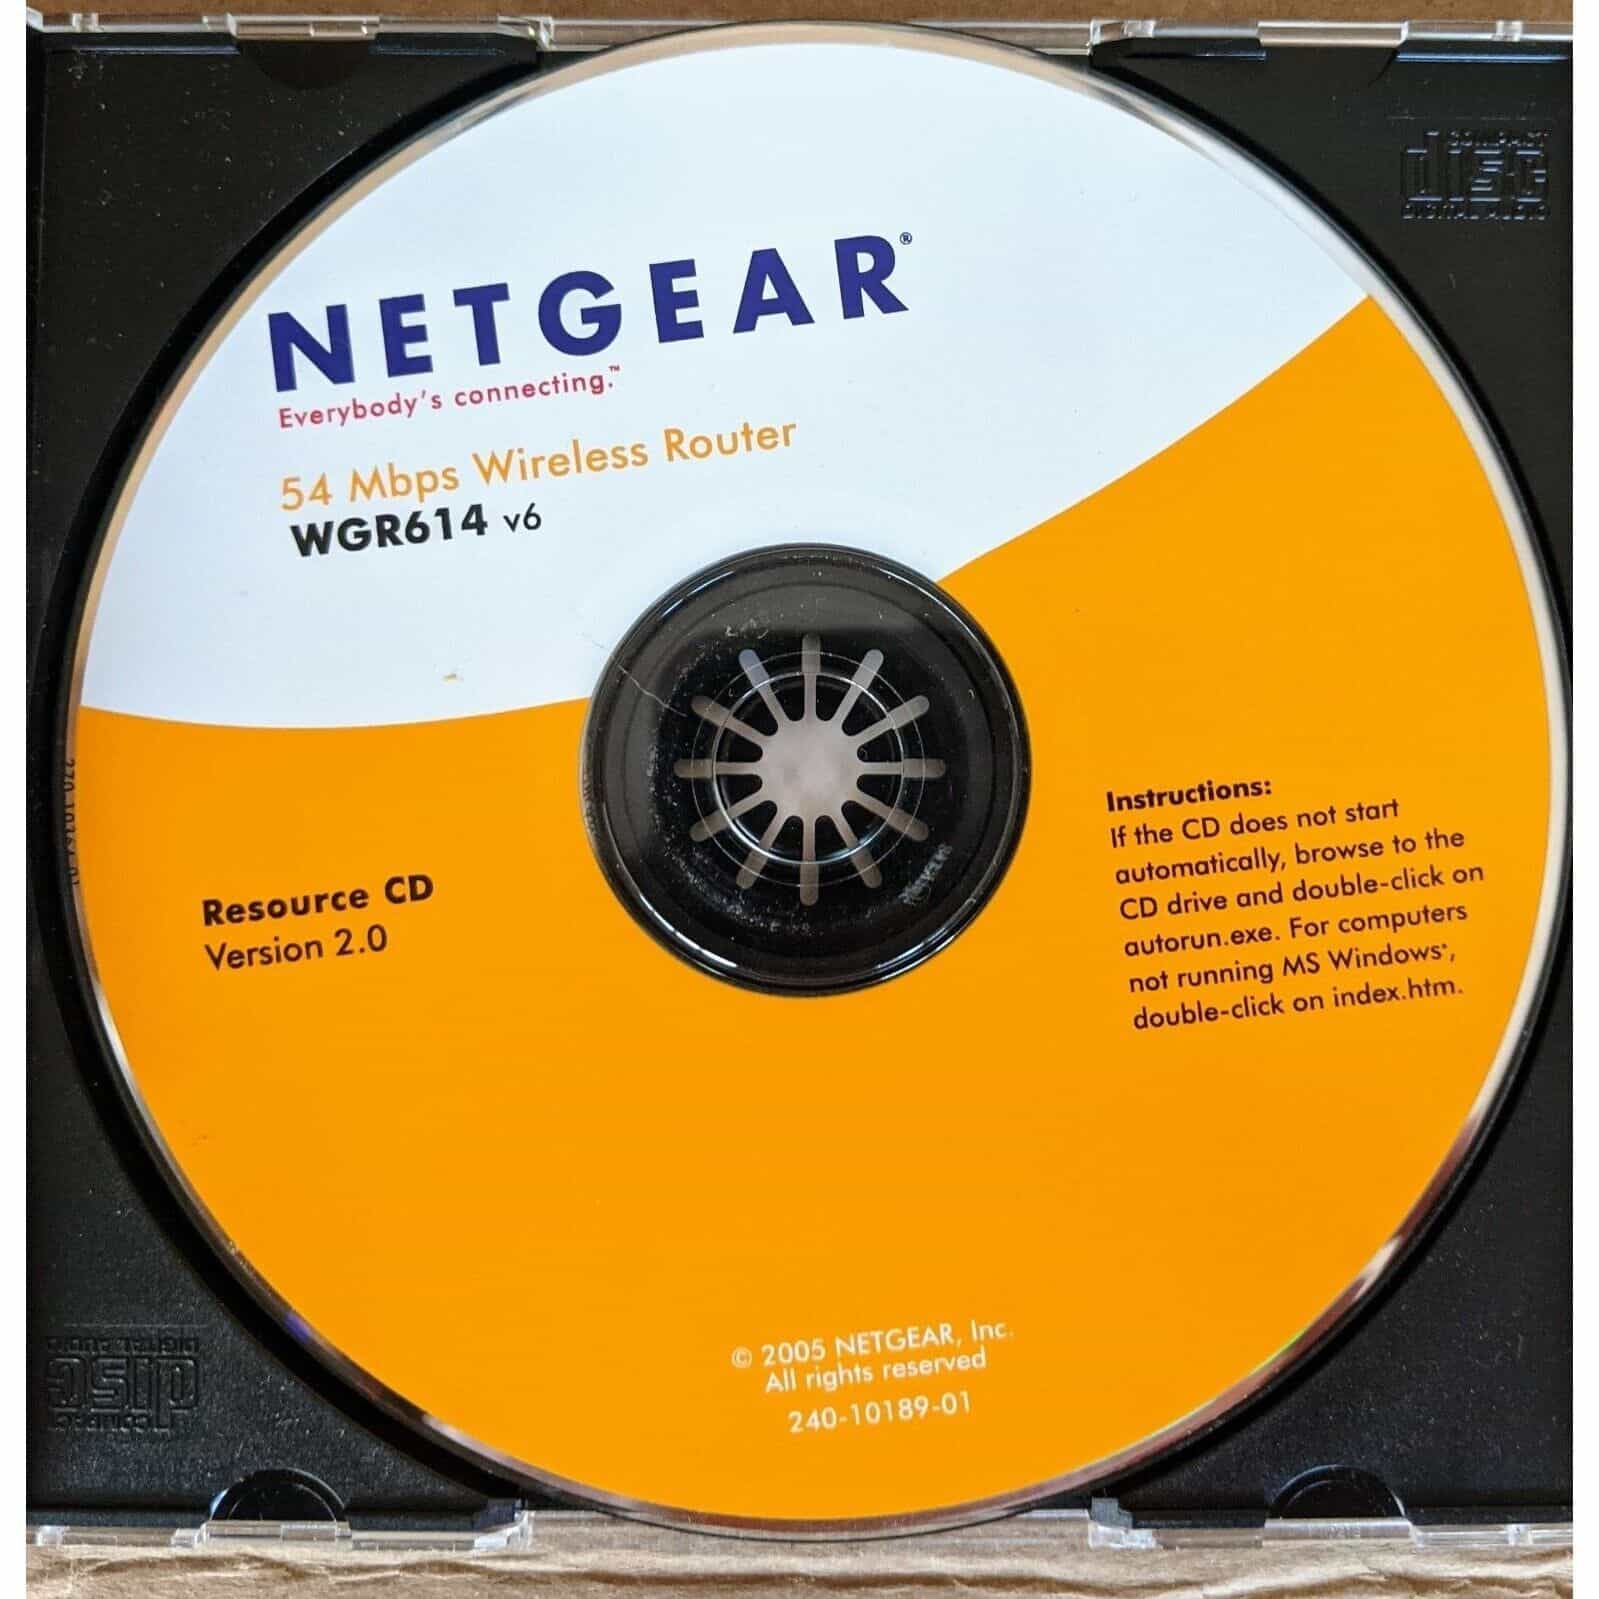 Netgear WGR614 v6 Wireless Router Installation Computer CD